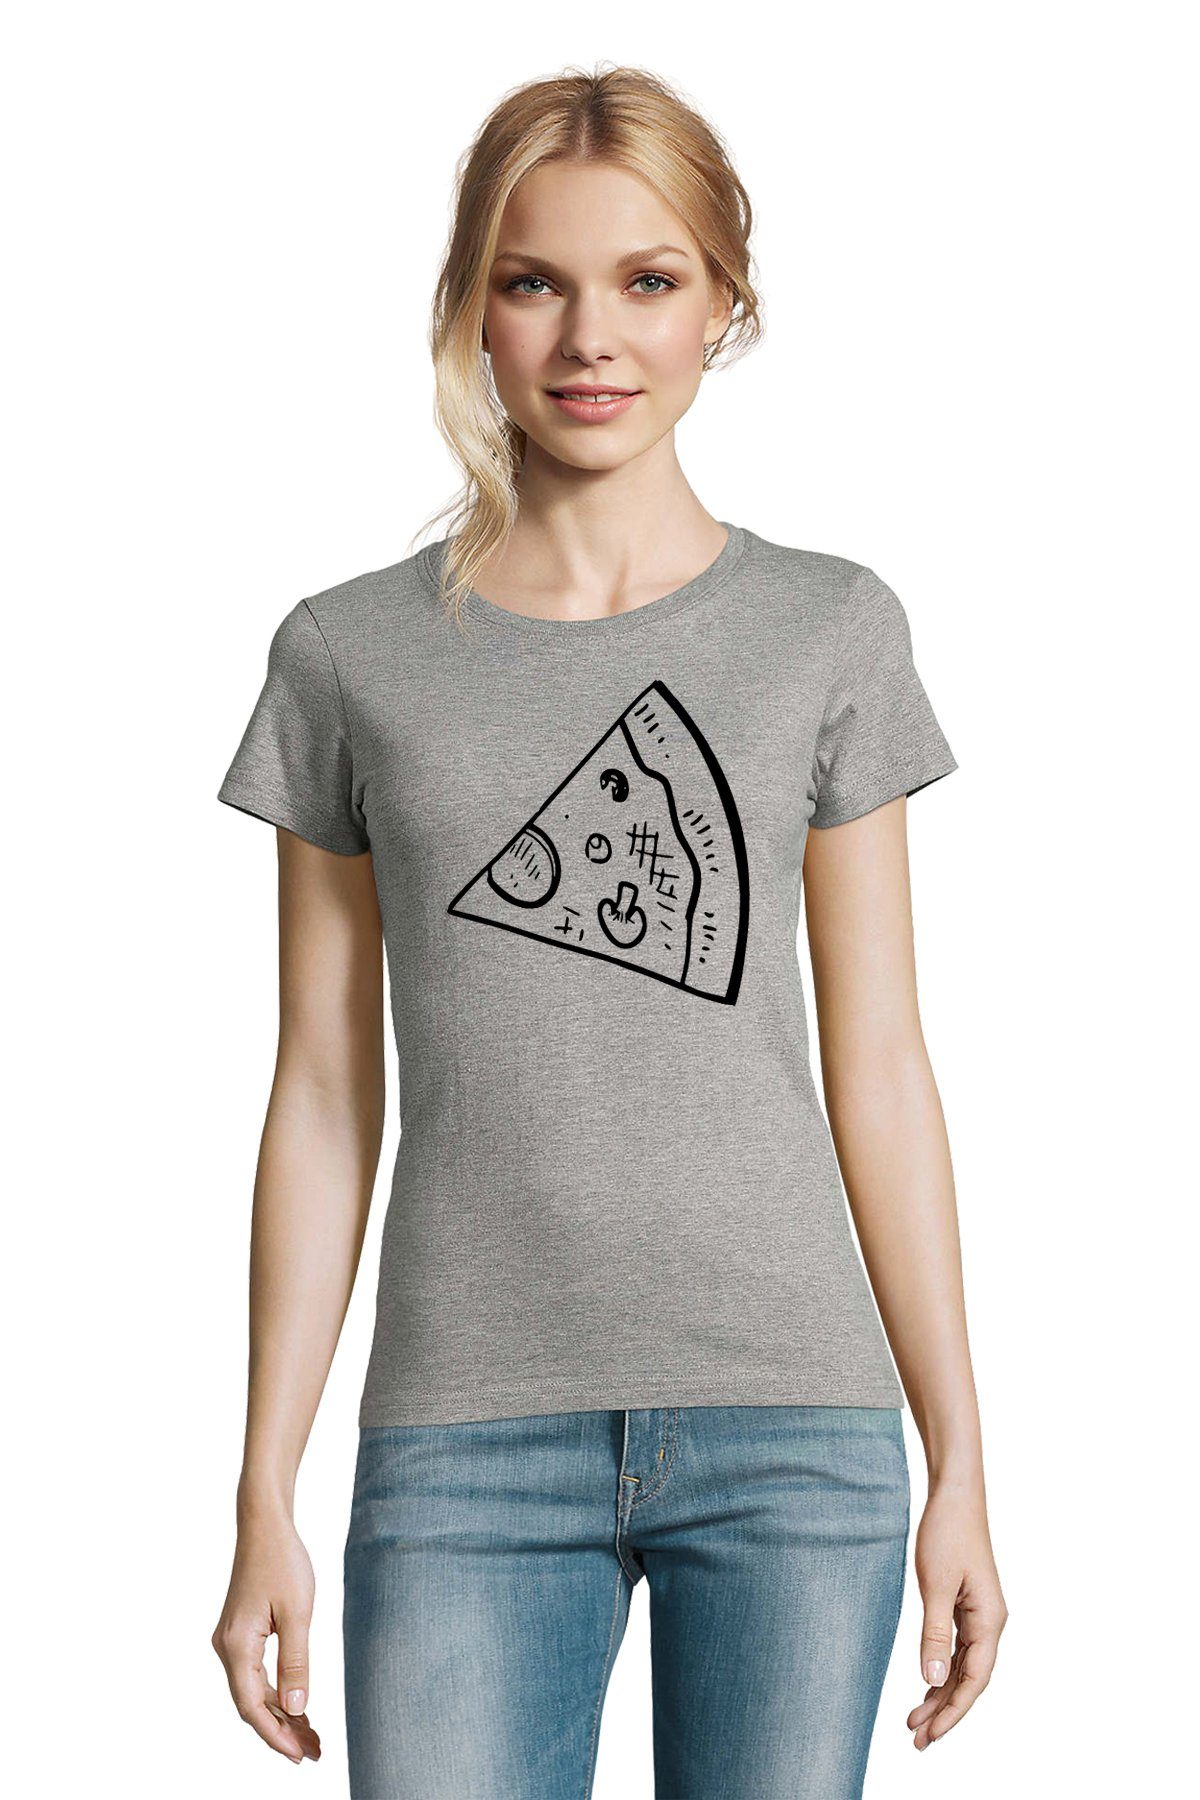 Pizza Friends Blondie Stück Pärchen Partner T-Shirt Grau & Valentin Damen Brownie Shirt BFF